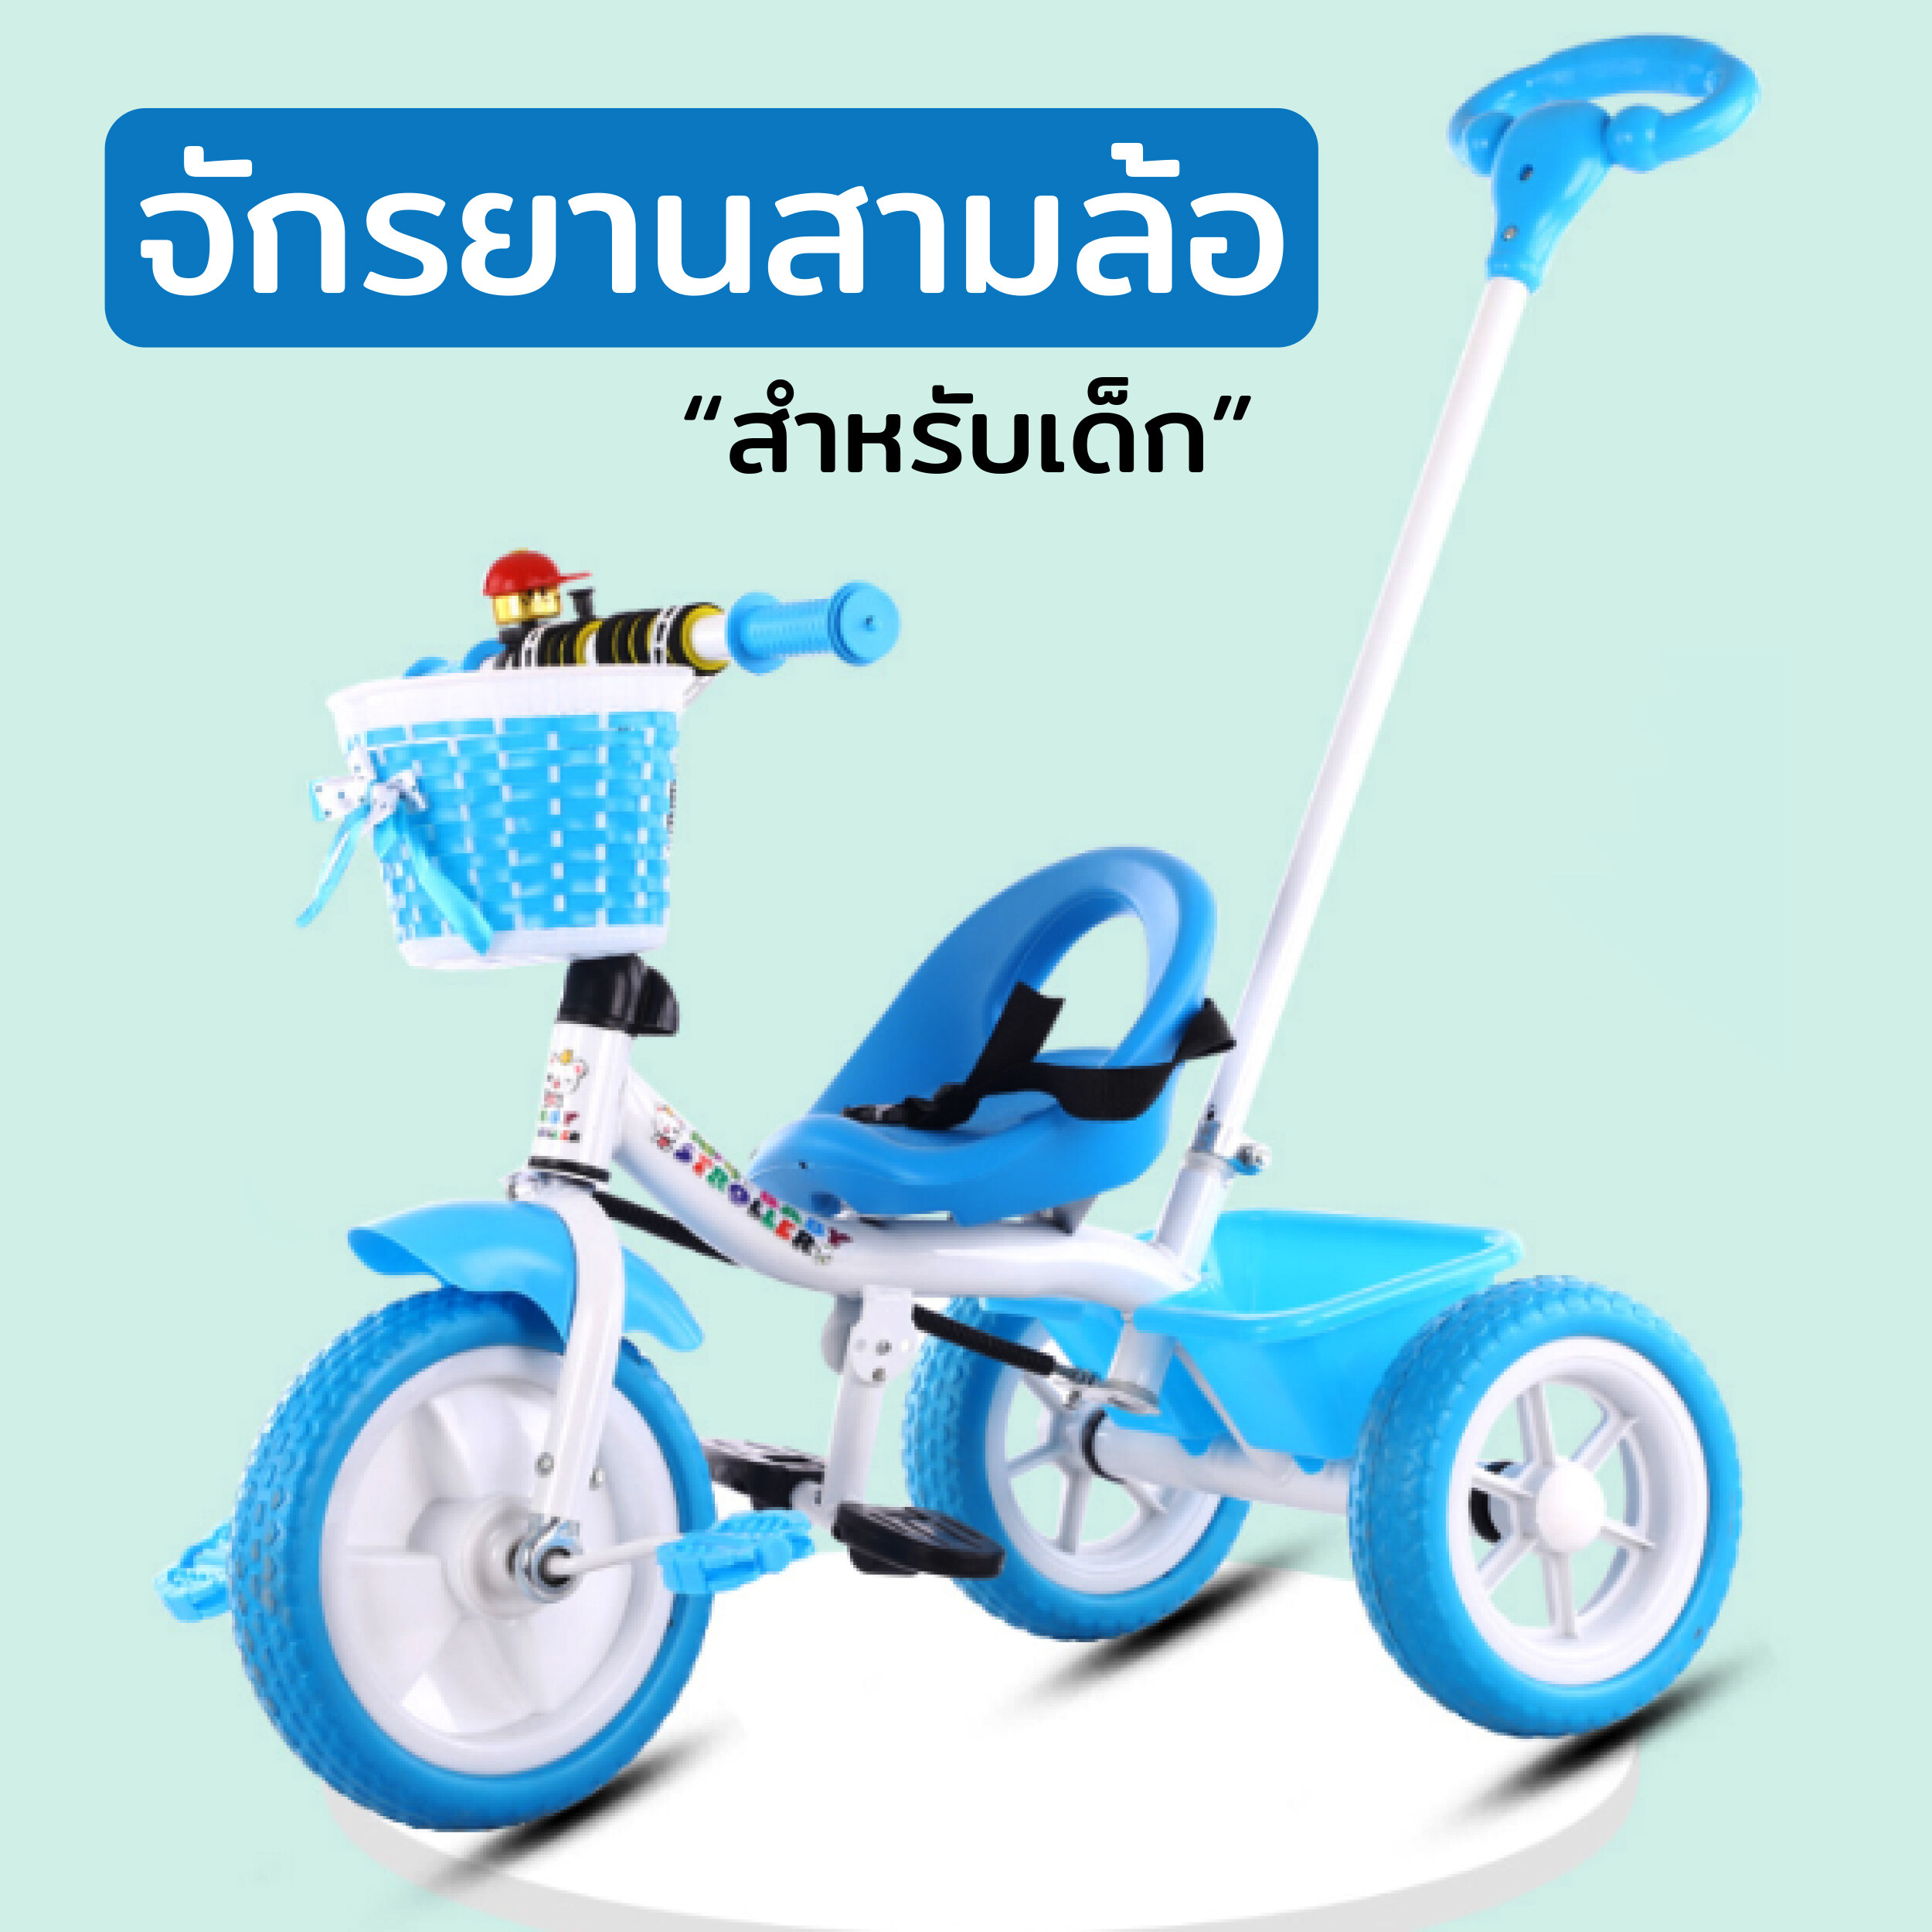 feitaiyang Dee taxt 2020 New ? รถจักรยานเด็ก รถจักรยานเด็ก 3 ล้อ จักรยานเด็ก มีตระกร้าด้านหลัง สำหรับเด็ก 2 ขวบขึ้นไป (สีชมพูสีขาวและสีฟ้า)